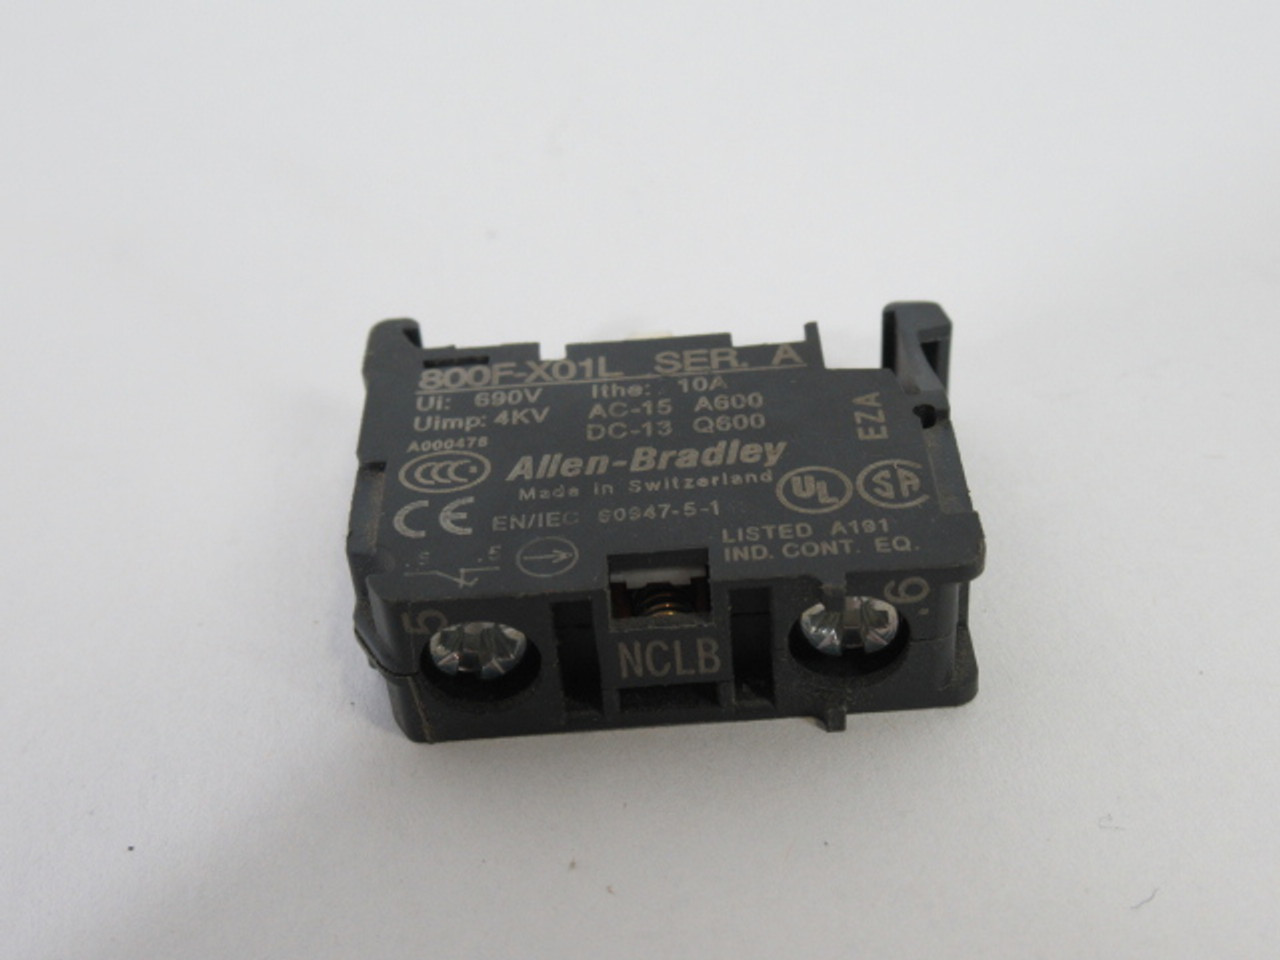 Allen-Bradley 800F-X01L Series A Push Button Contact Block 1NCLB USED